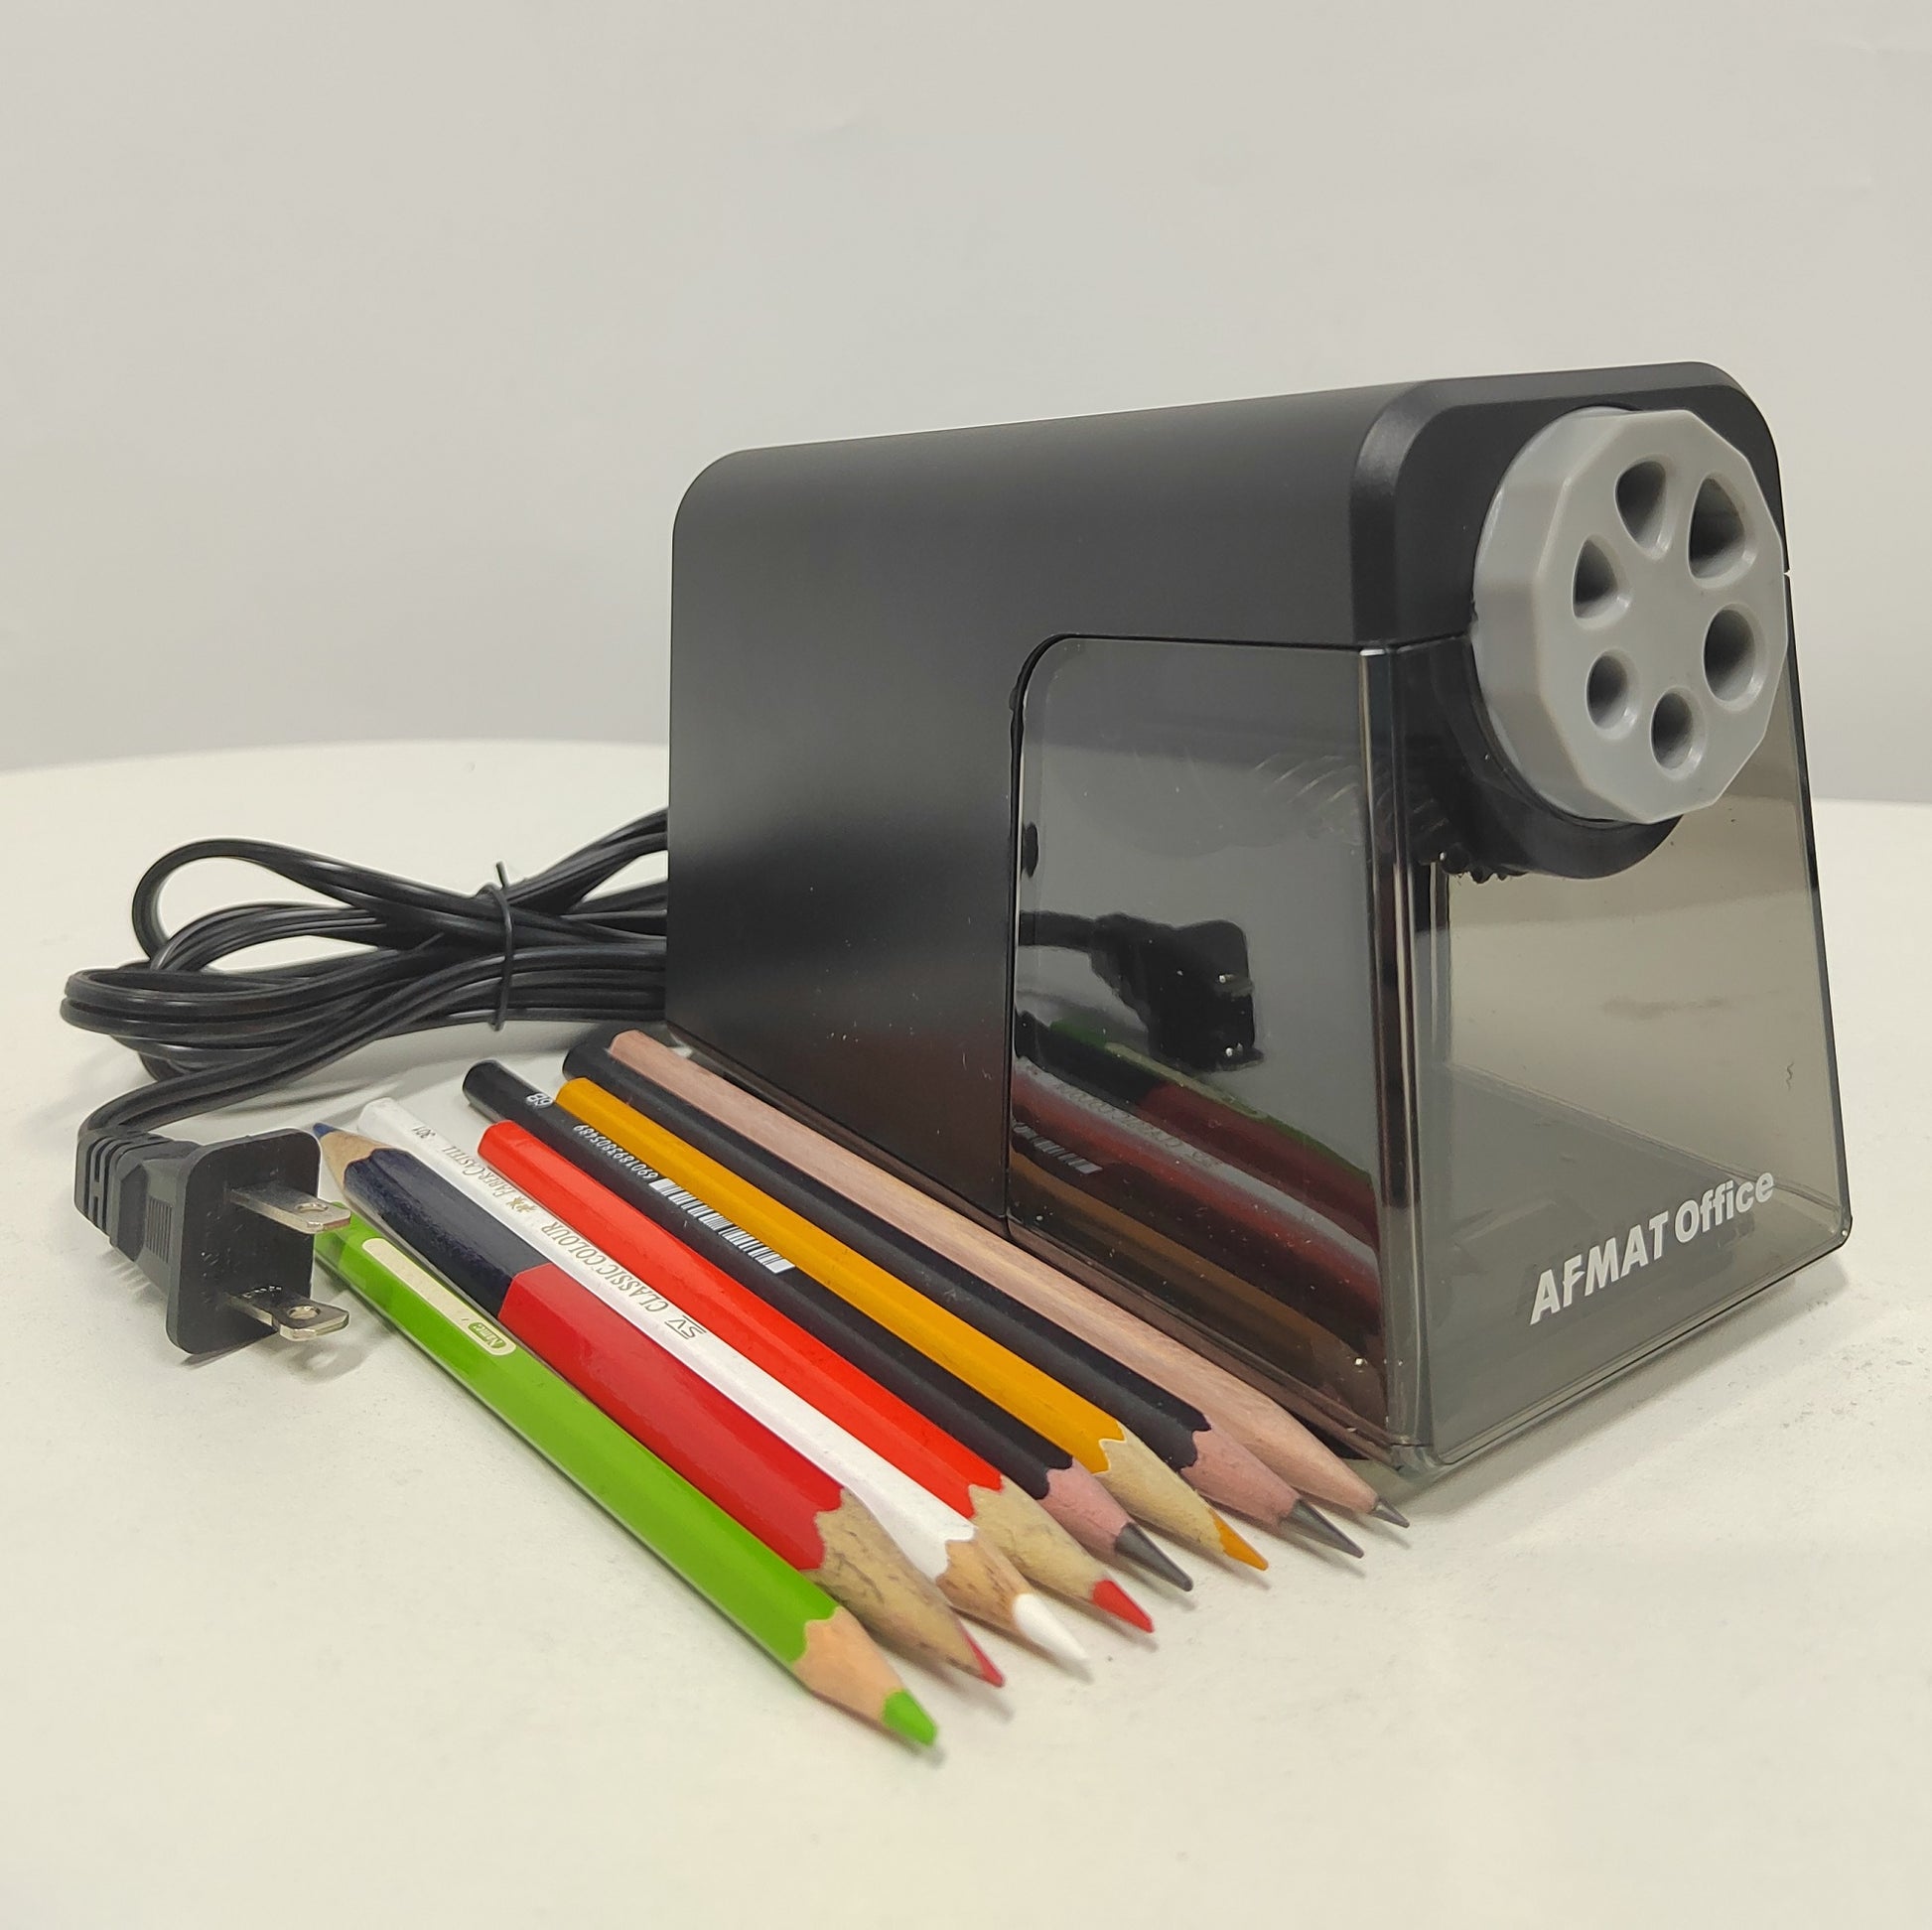 AFMAT afmat pencilsharpener, electric  pencilsharpenerforcoloredpencils,autostop,fast sharpen in 3s,large  holepencilsharpenerpluginf